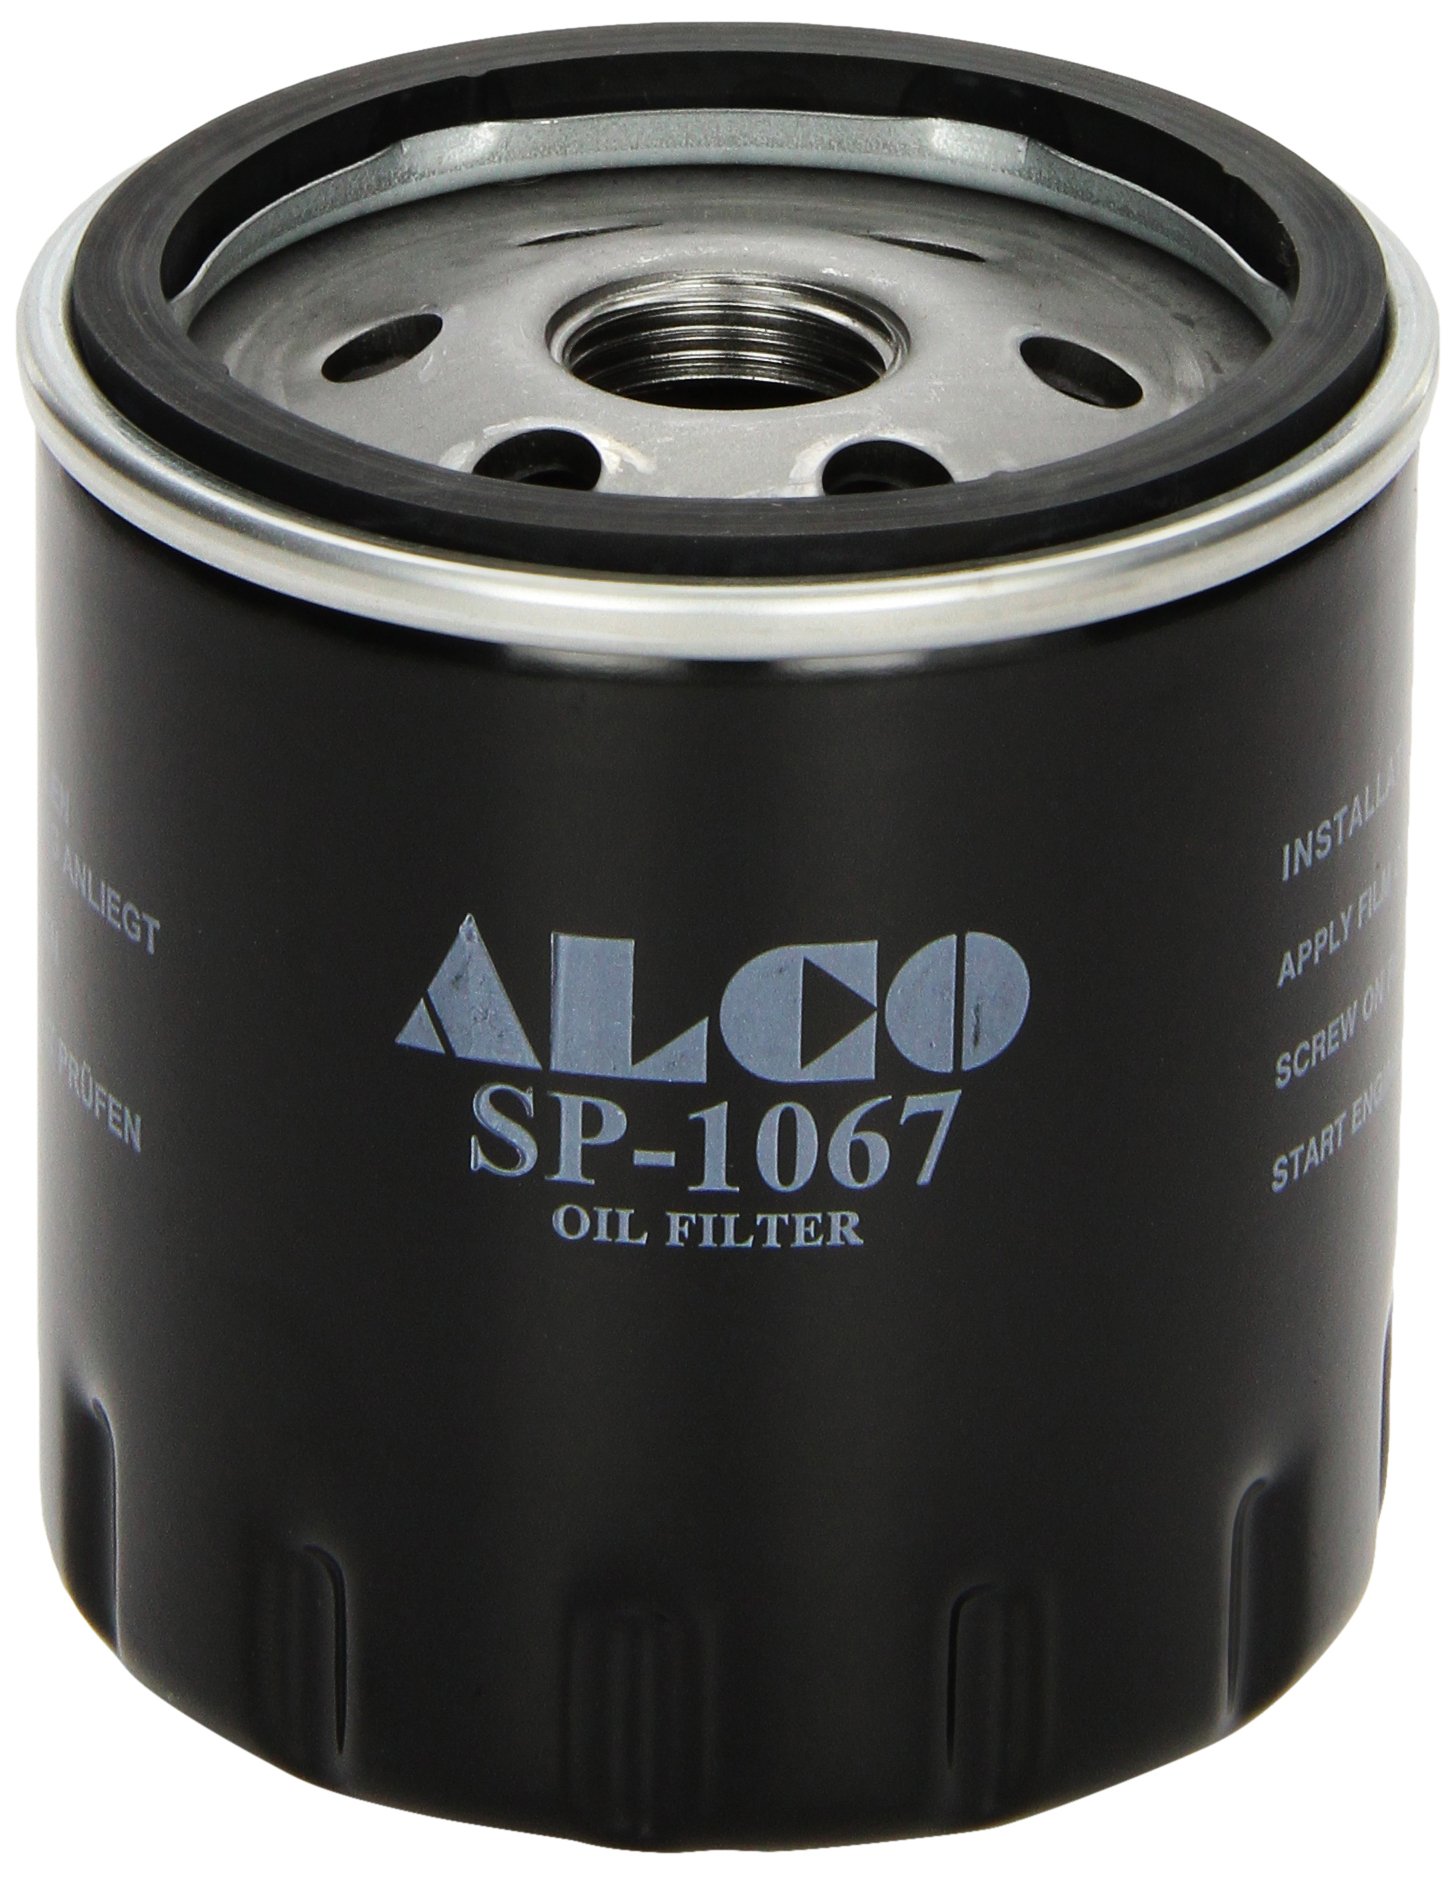 Alco Filter SP-1067 Ölfilter von Alco Filter